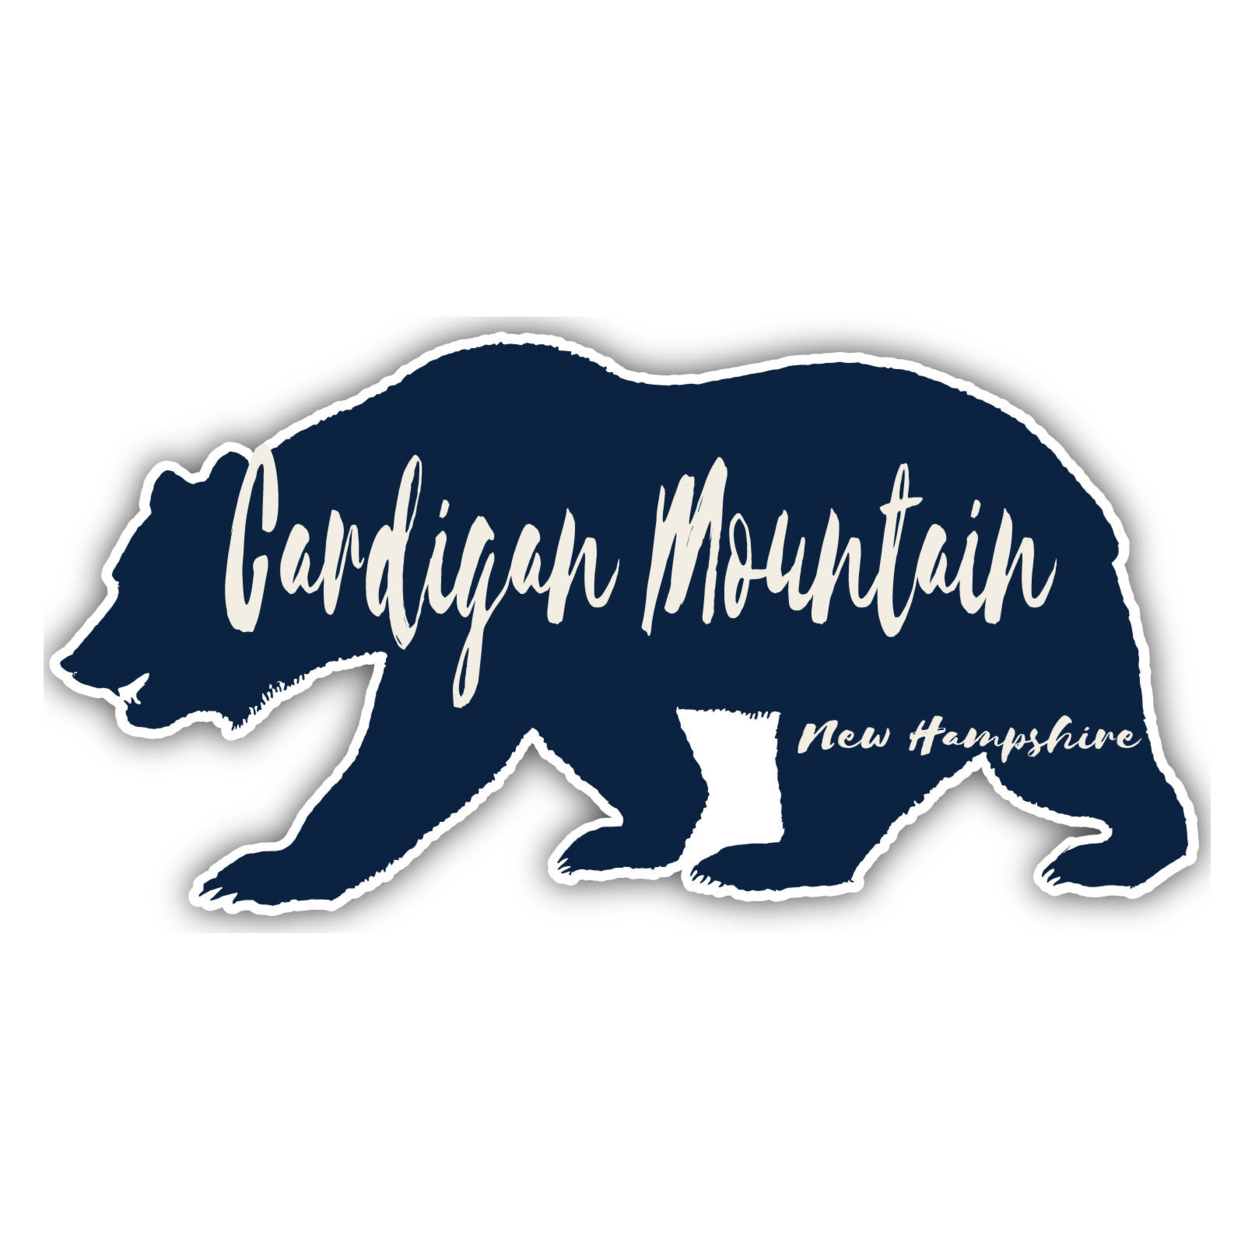 Cardigan Mountain New Hampshire Souvenir Decorative Stickers (Choose Theme And Size) - Single Unit, 10-Inch, Bear